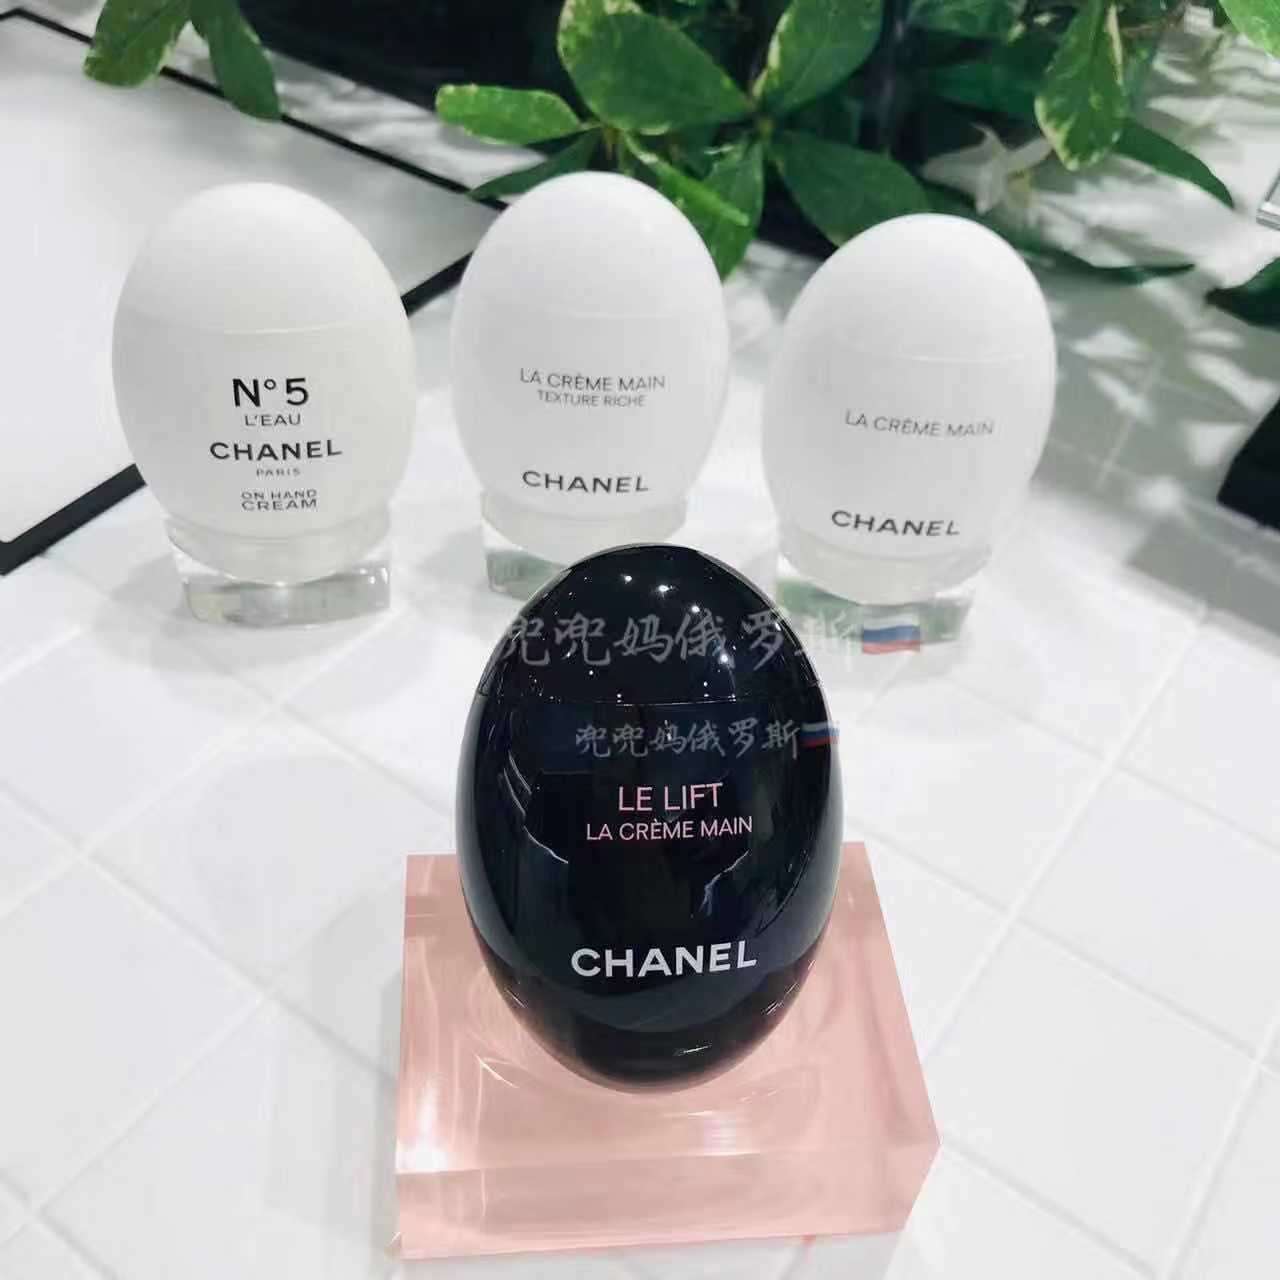 Chanel No.5 L'Eau On Hand Cream 50ml